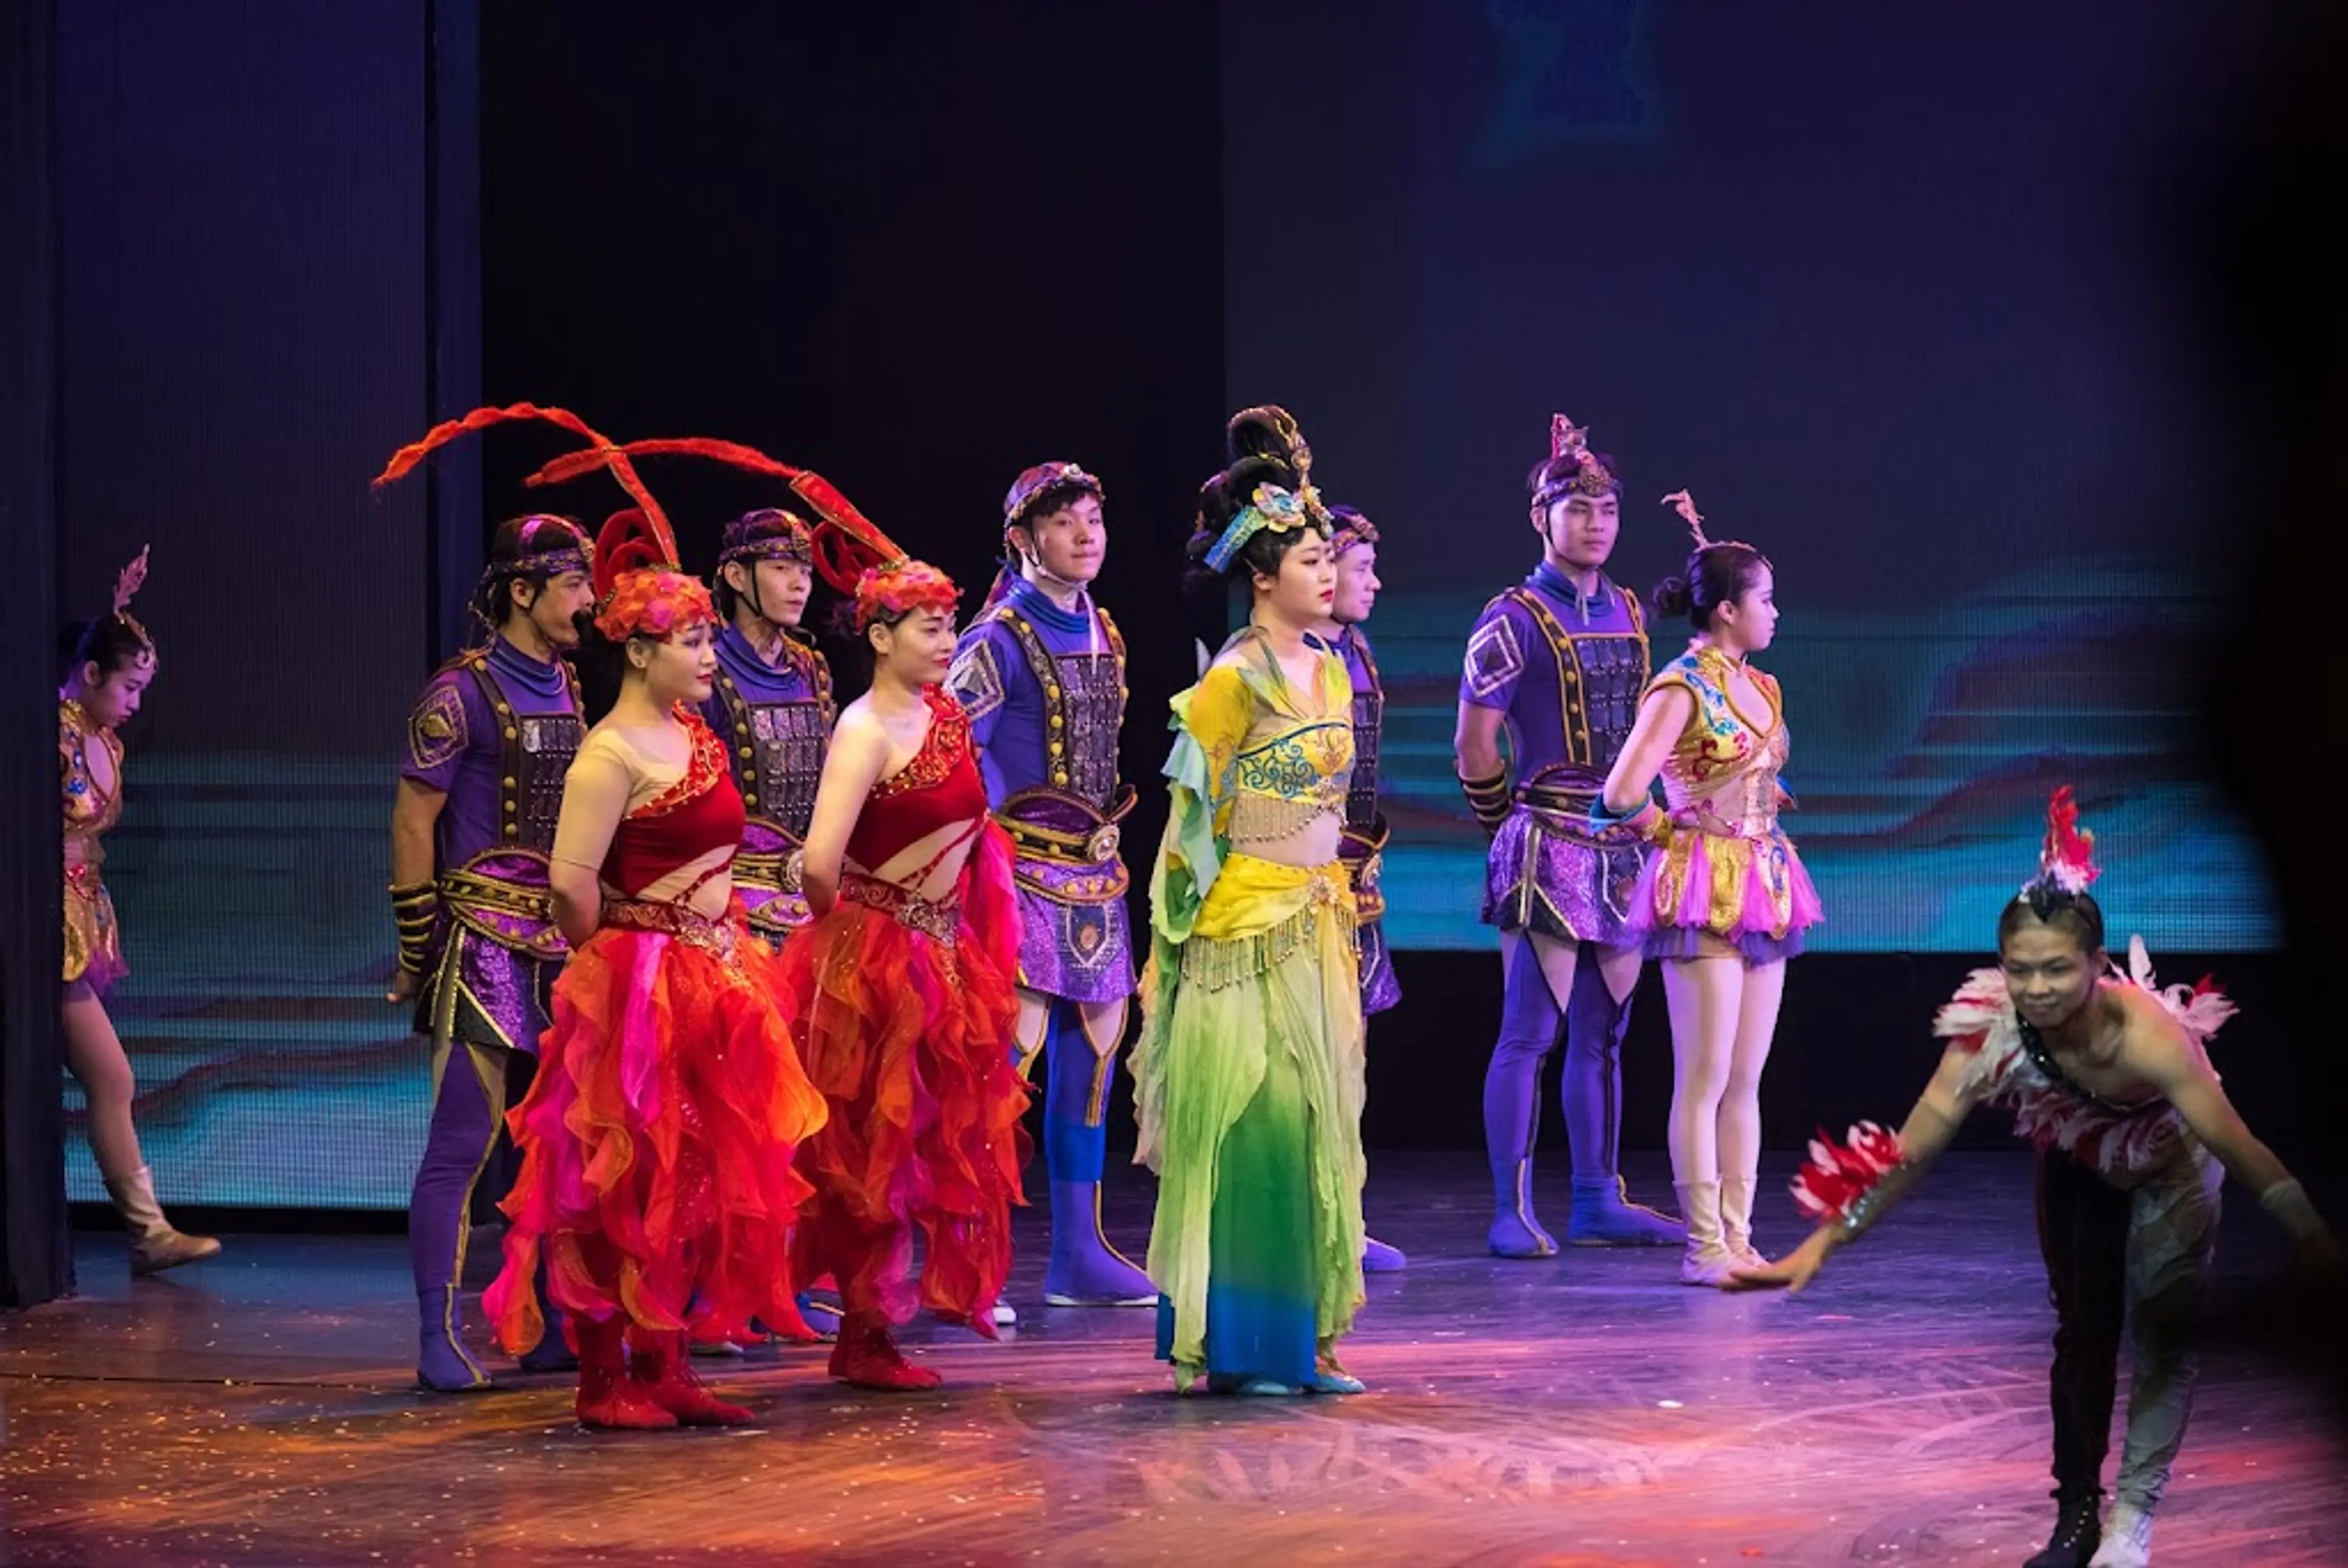 Chinese opera or acrobatics show